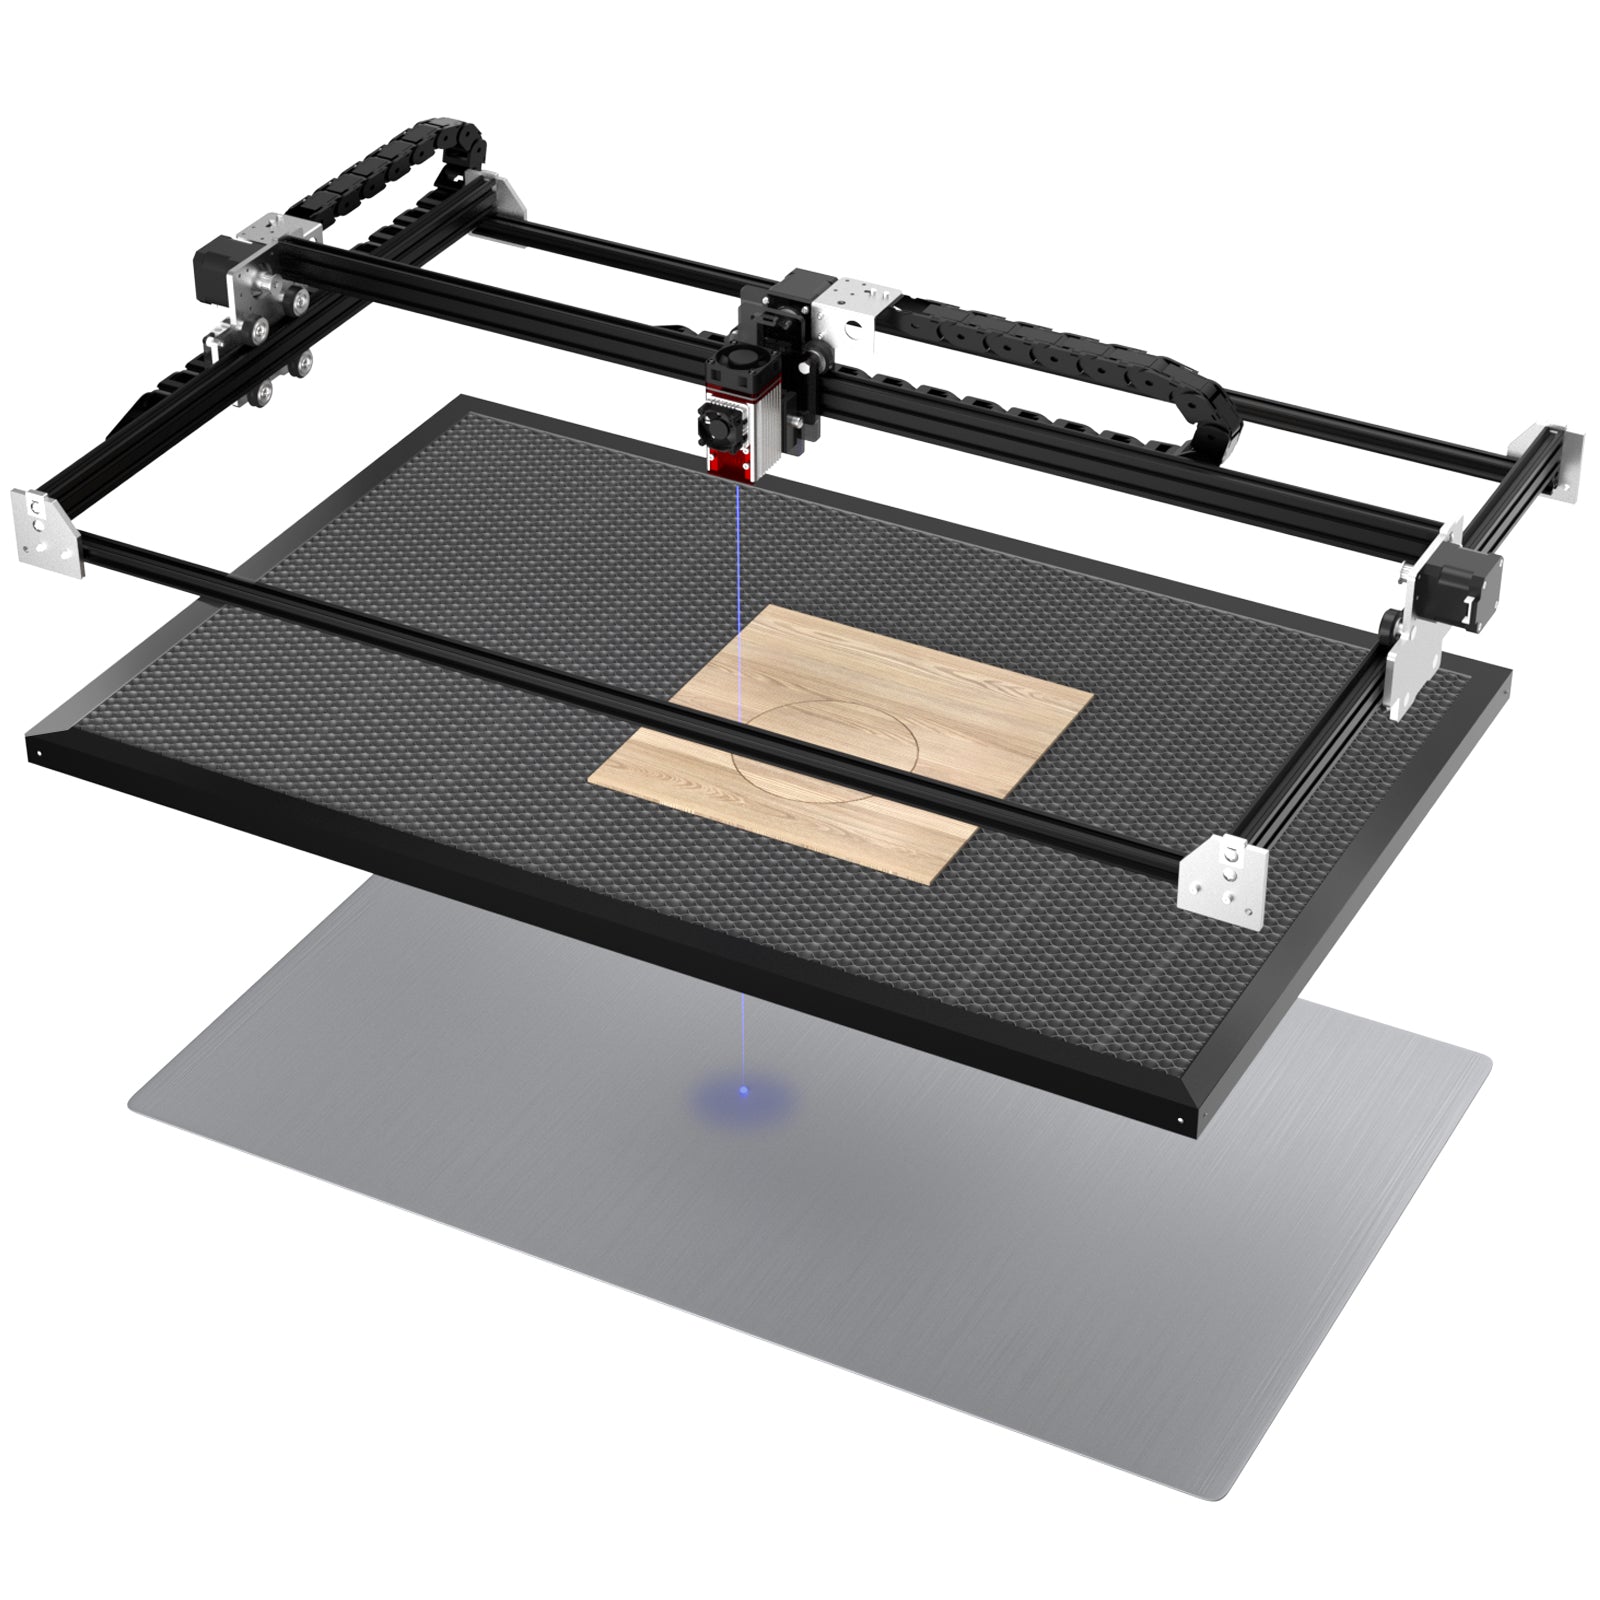 Honeycomb Laser Bed Working Table for Laser Cutter Engraver